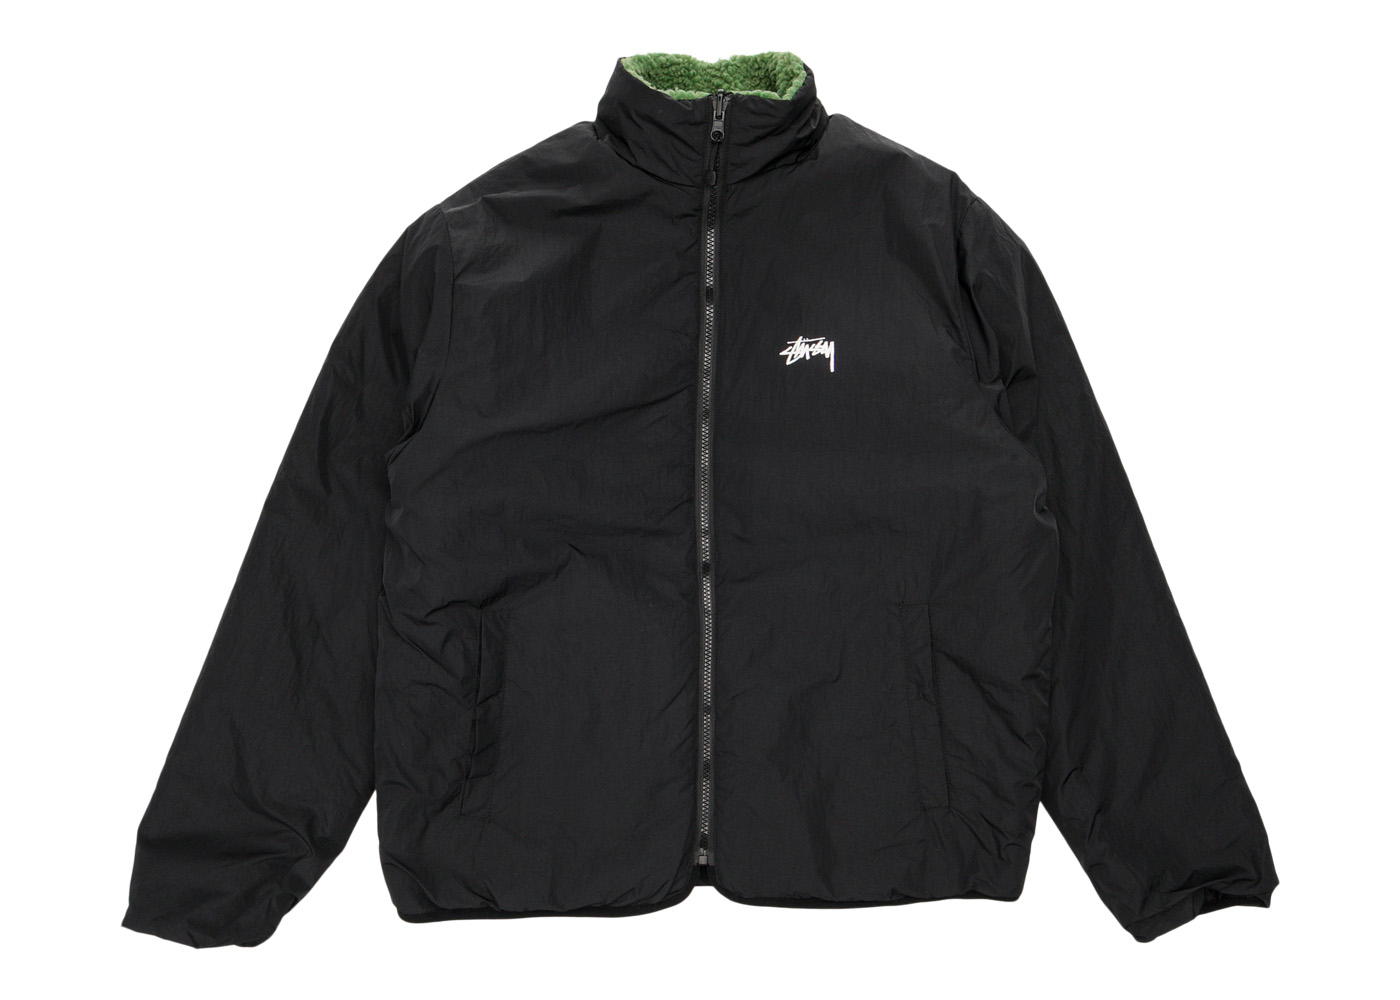 Stussy 8 Ball Sherpa Reversible Jacket Green